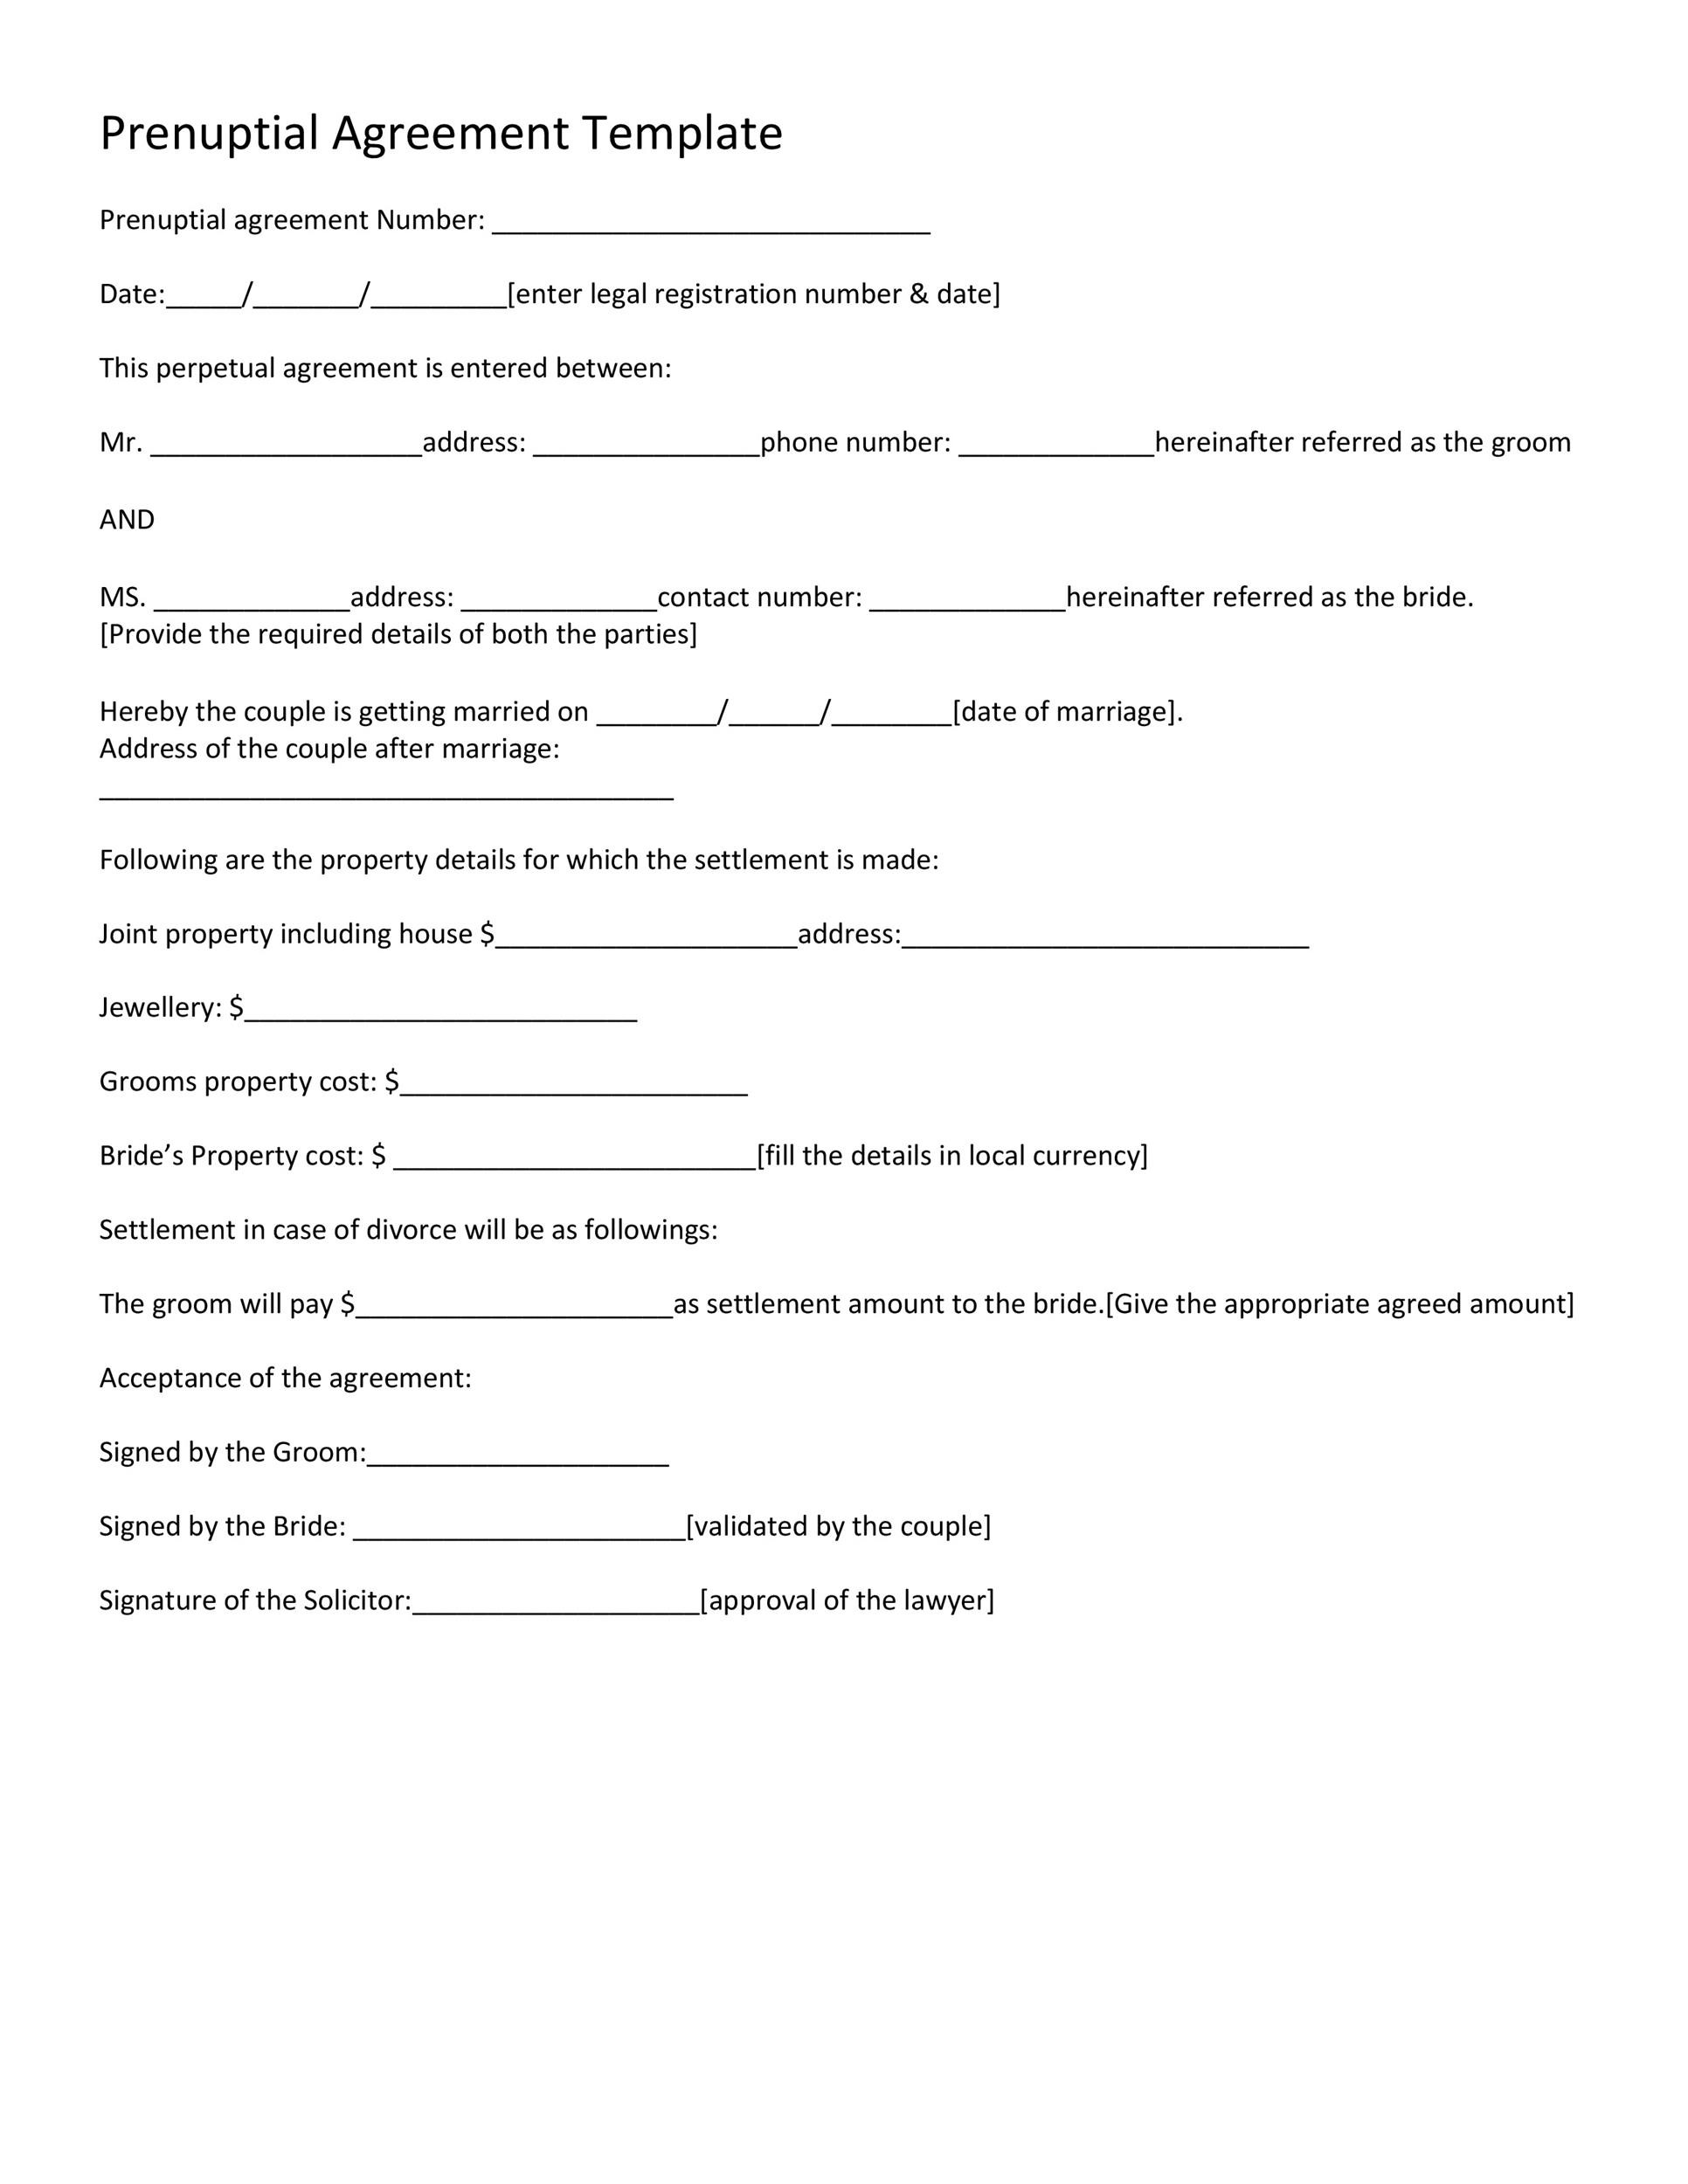 30-prenuptial-agreement-samples-forms-templatelab